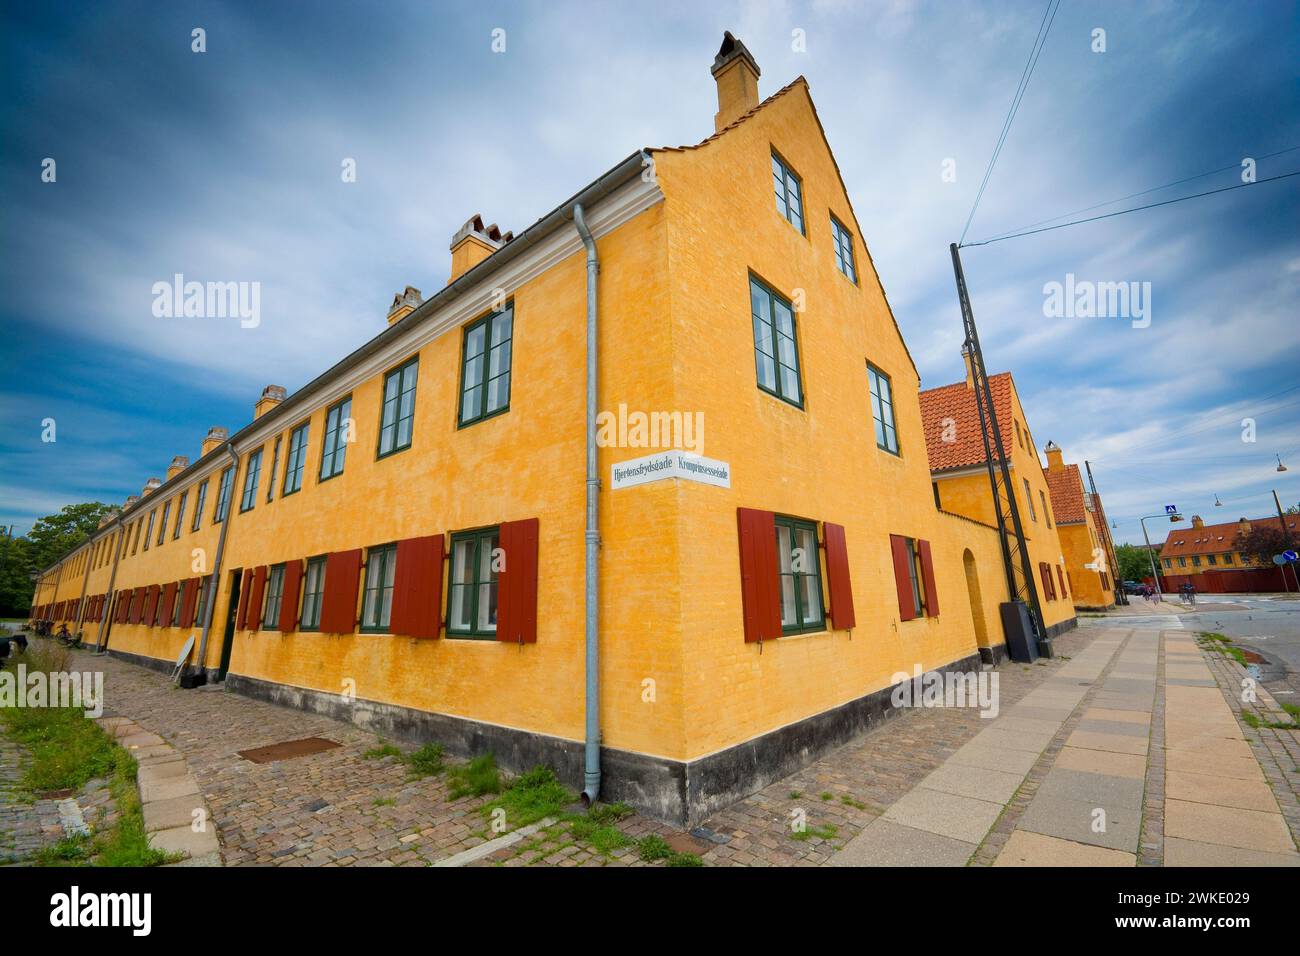 Nyboder - historic row house district of former Naval barracks in Copenhagen, Denmark Stock Photo